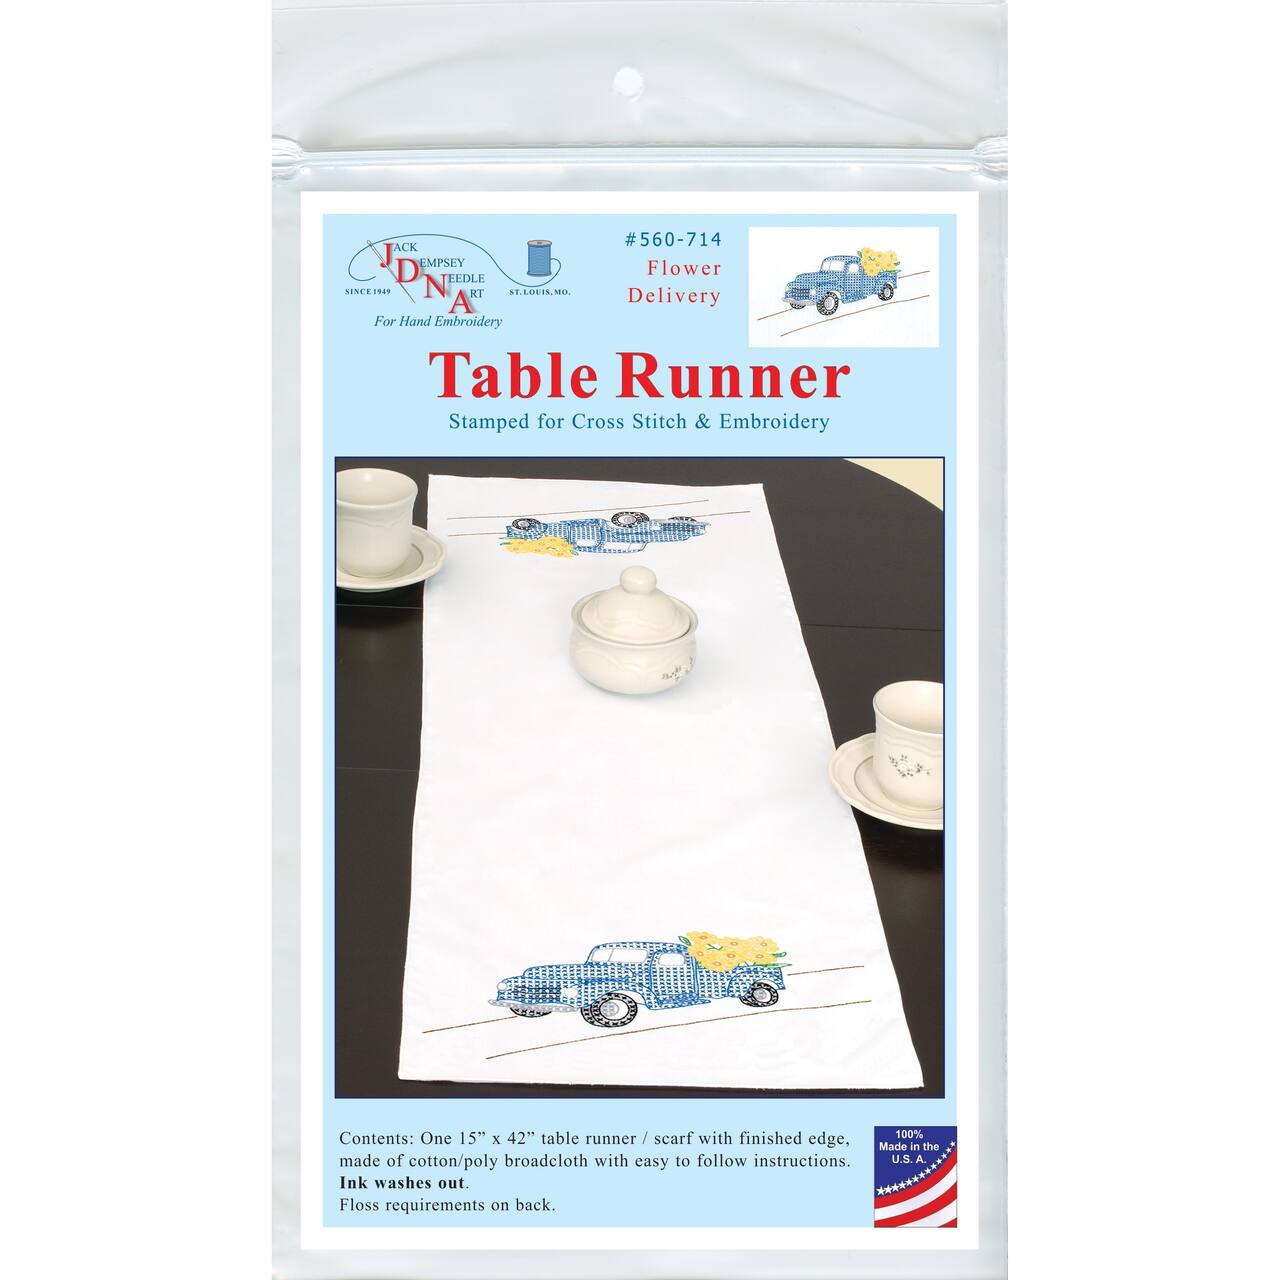 Jack Dempsey Flower Delivery Stamped Table Runner Kit